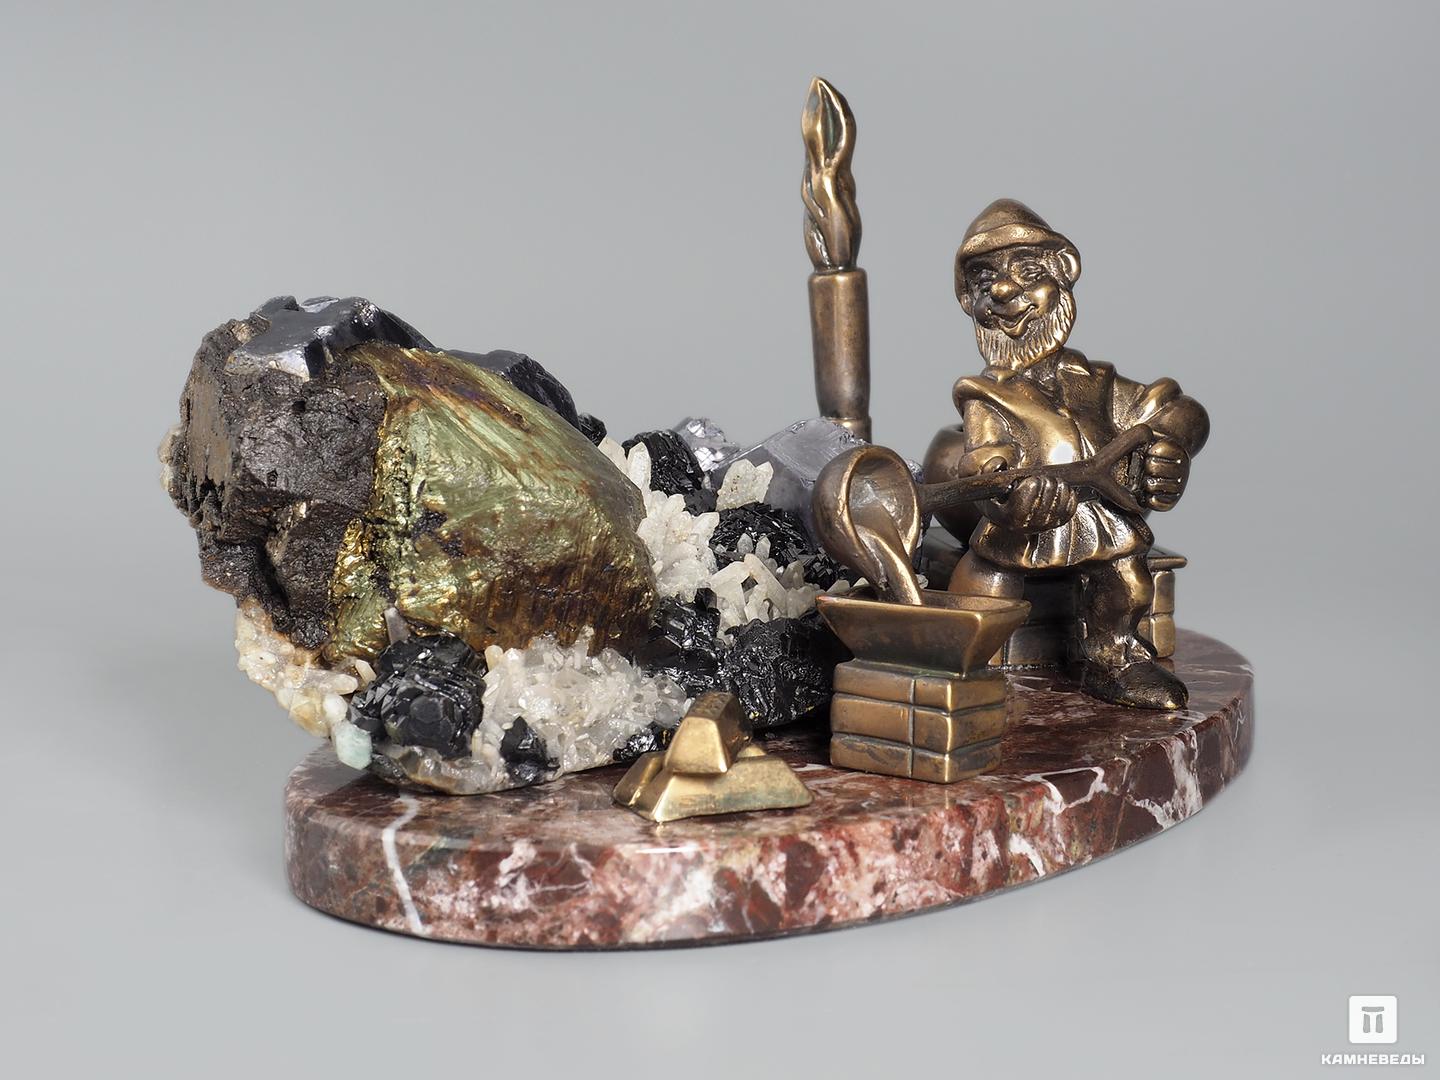 Композиция со сфалеритом, халькопиритом и кварцем на мраморе, 15х8,2 см, 18964, фото 2